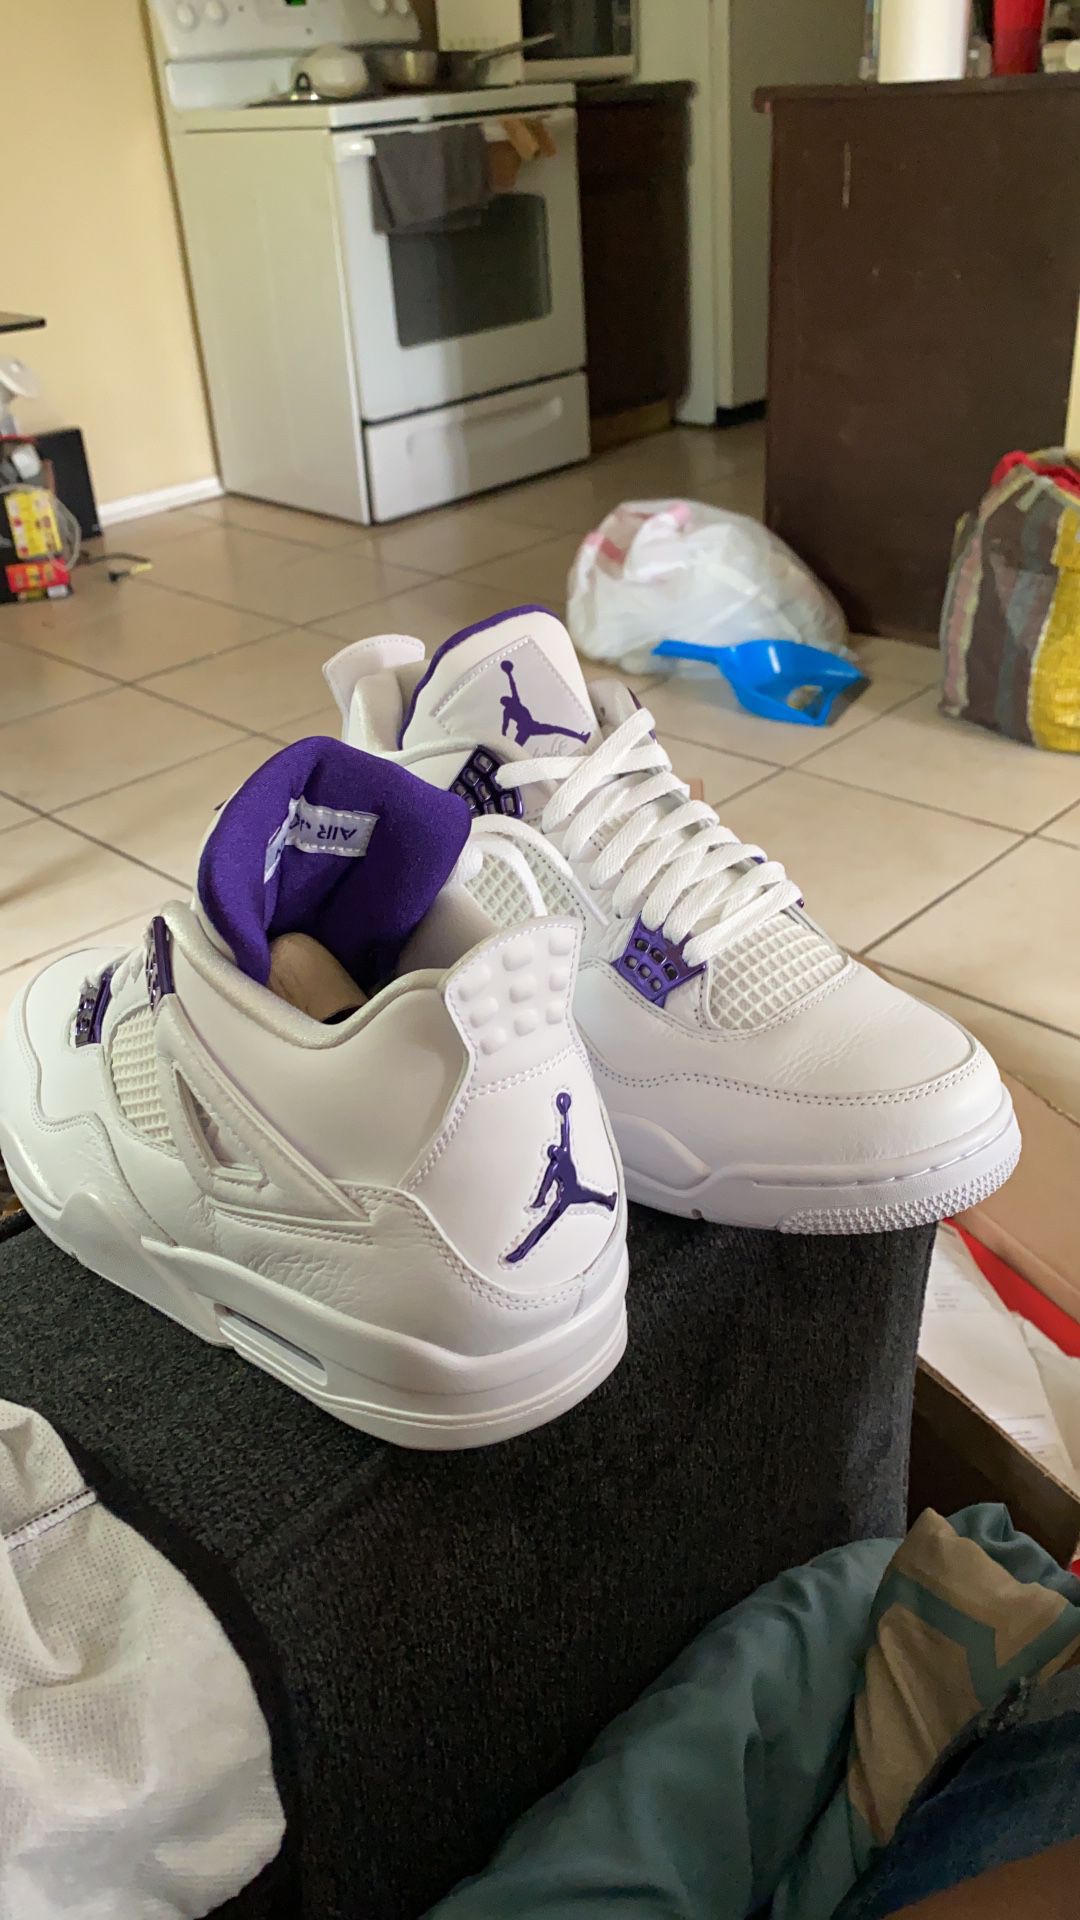 Jordan purple and white 4s